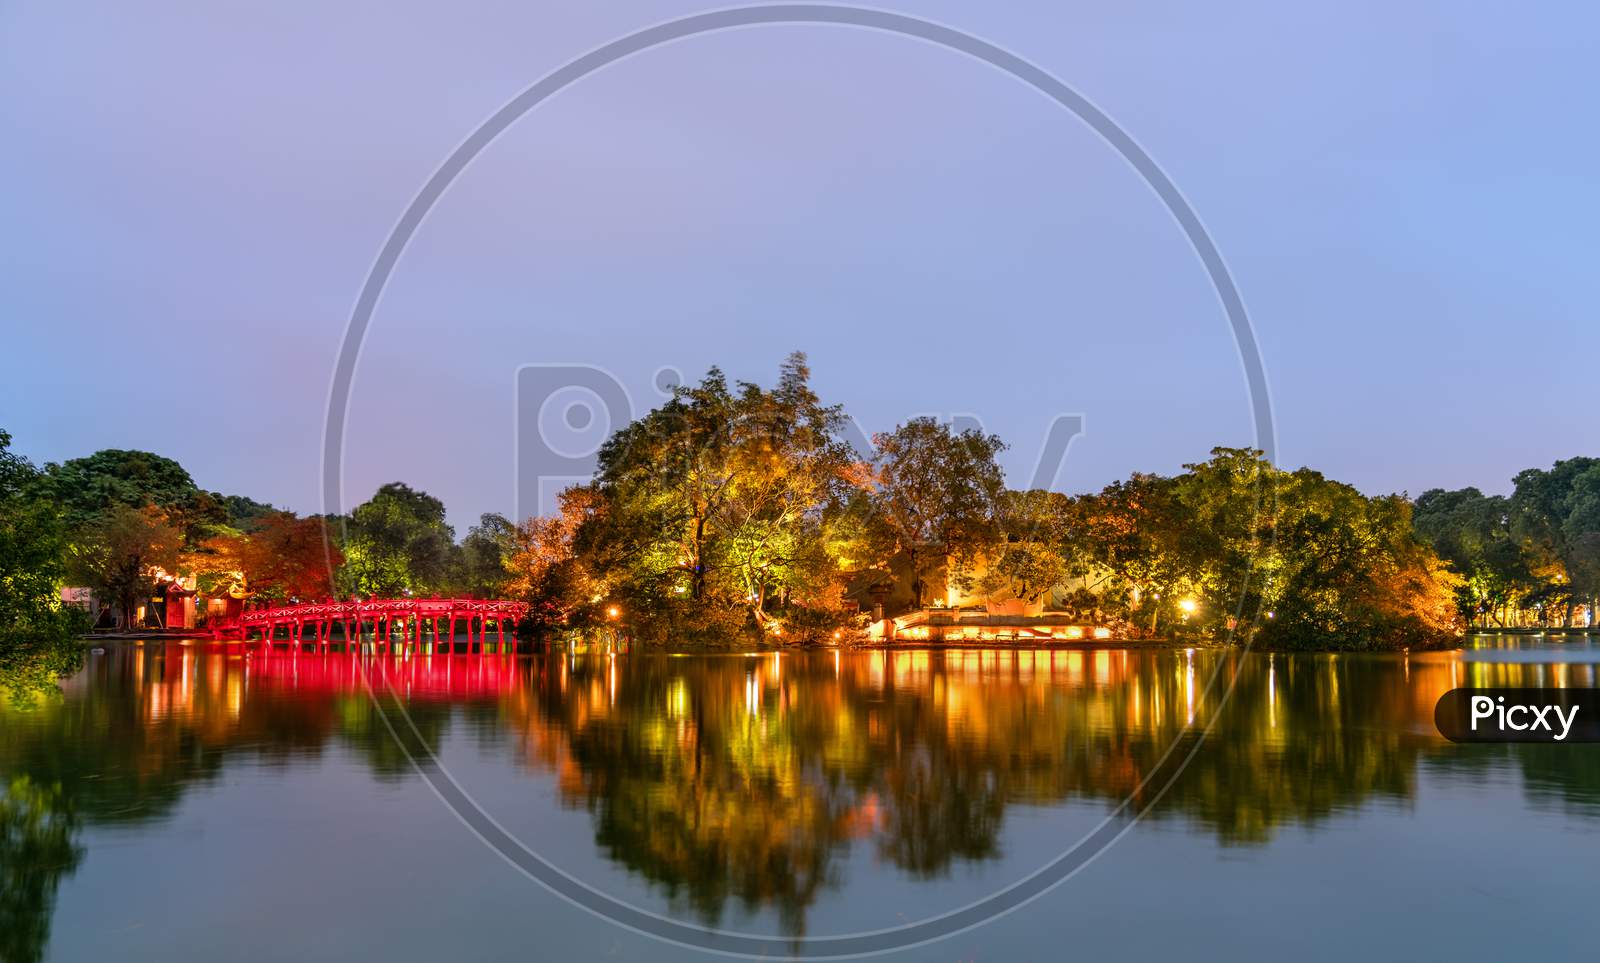 The Huc Bridge And The Temple Of The Jade Mountain On Hoan Kiem Lake In Hanoi, Vietnam